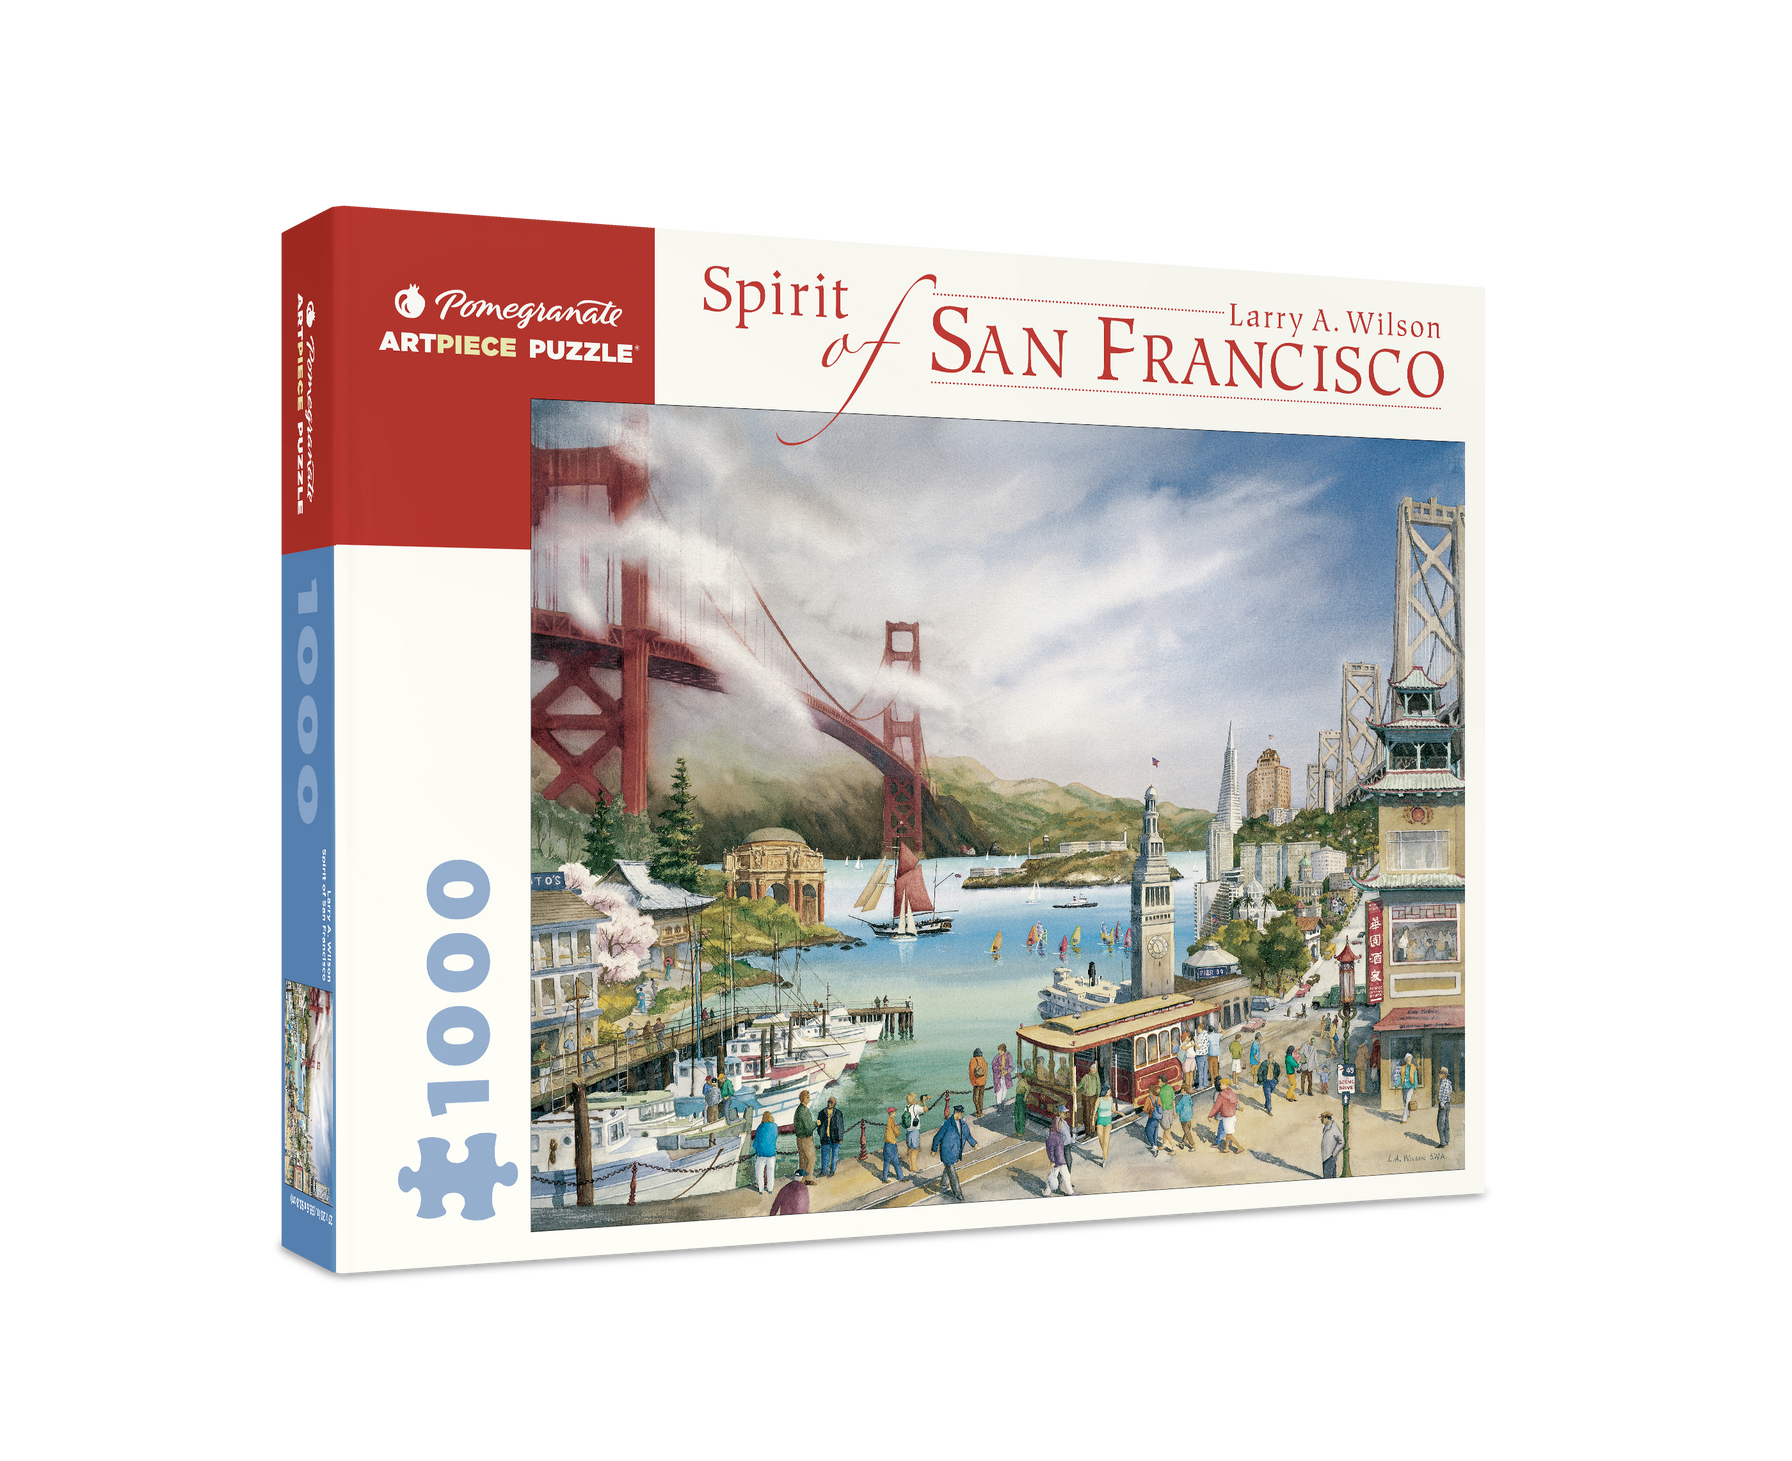 Larry A. Wilson: Spirit of San Francisco 1000-piece Jigsaw Puzzle